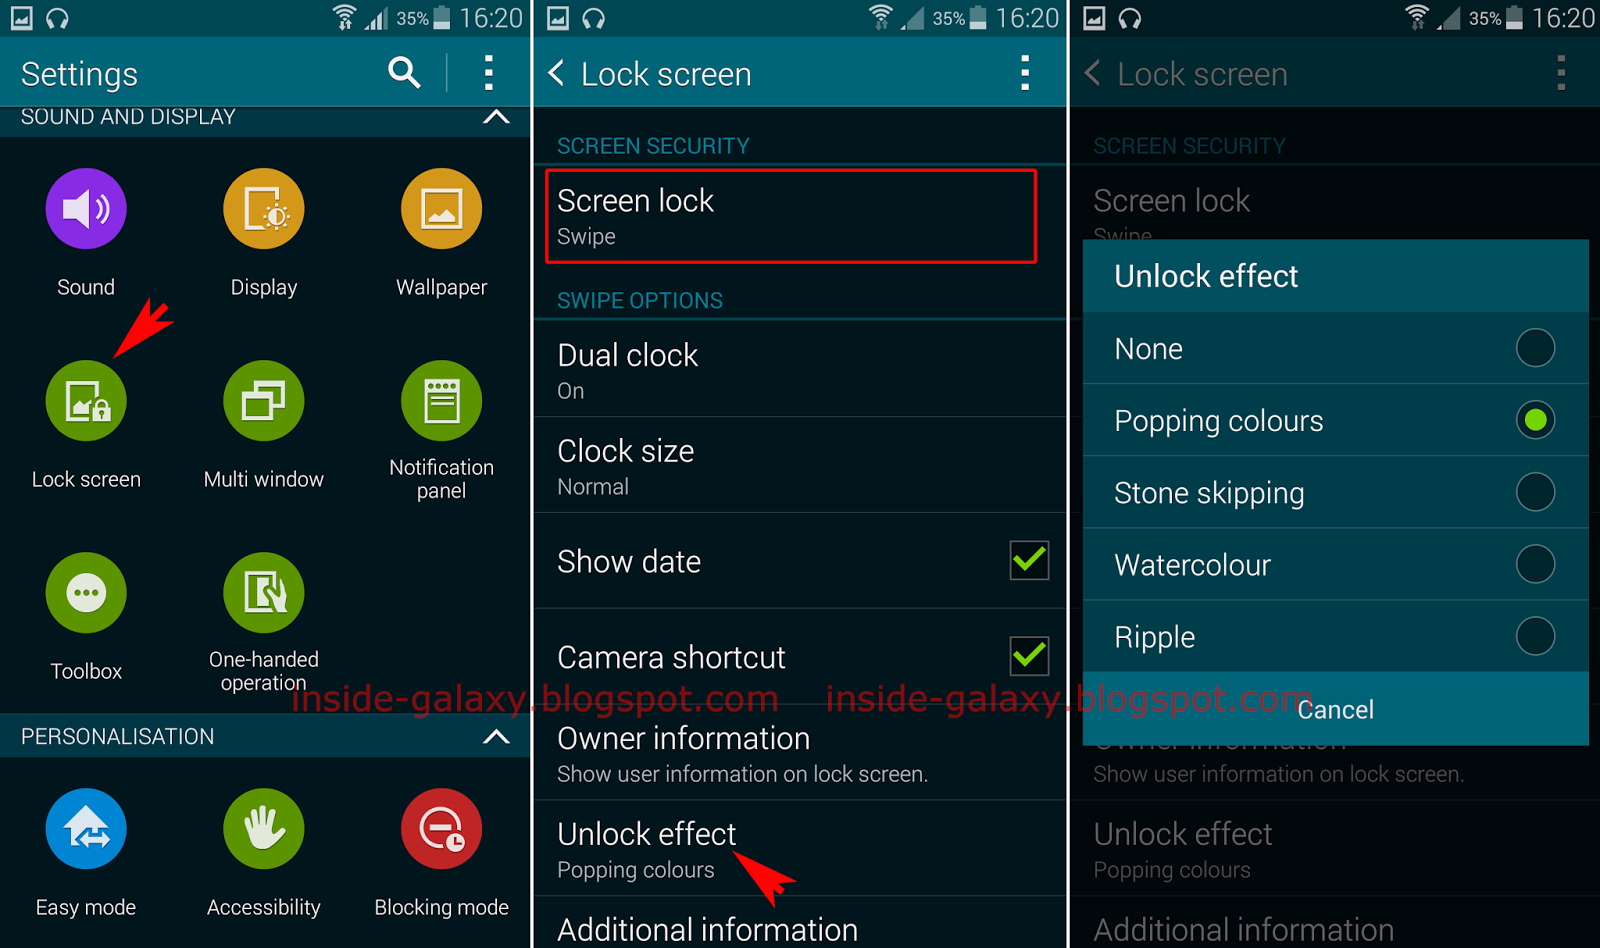 Inside Galaxy: Samsung Galaxy S5: How to Change Lock Screen Effect in